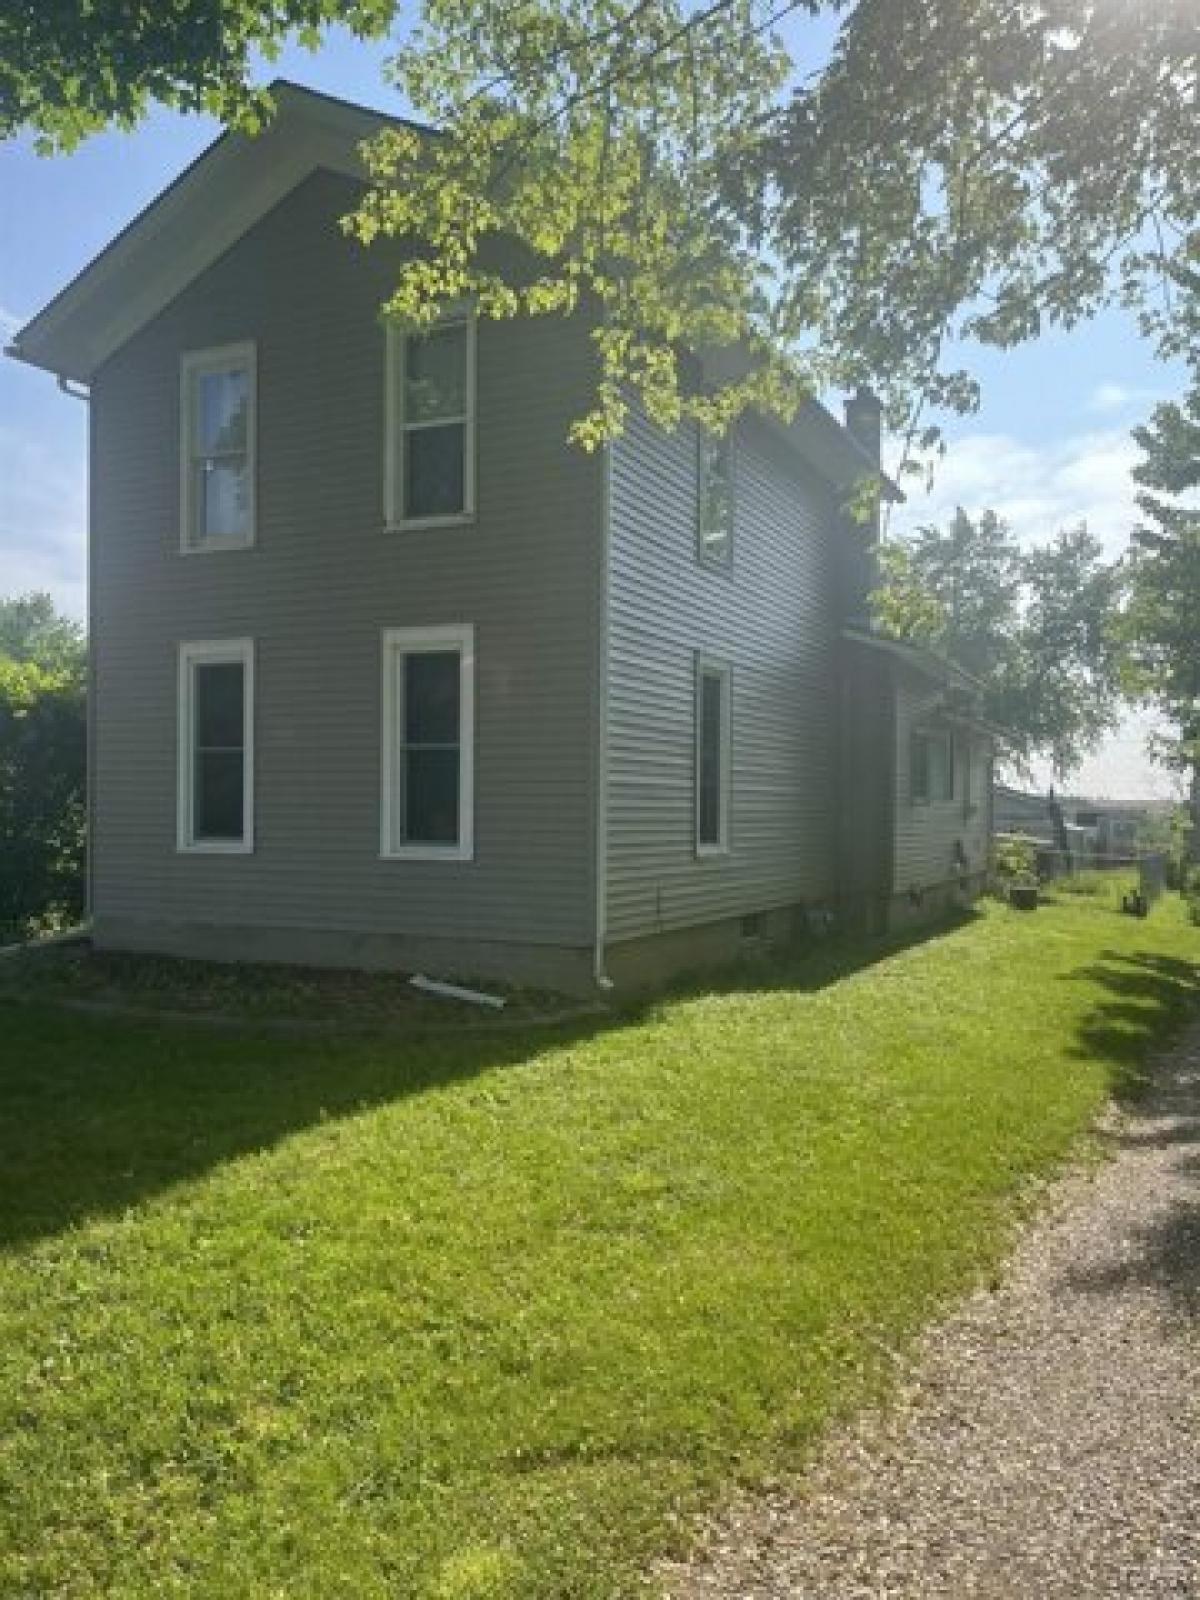 Picture of Home For Sale in Jasper, Michigan, United States